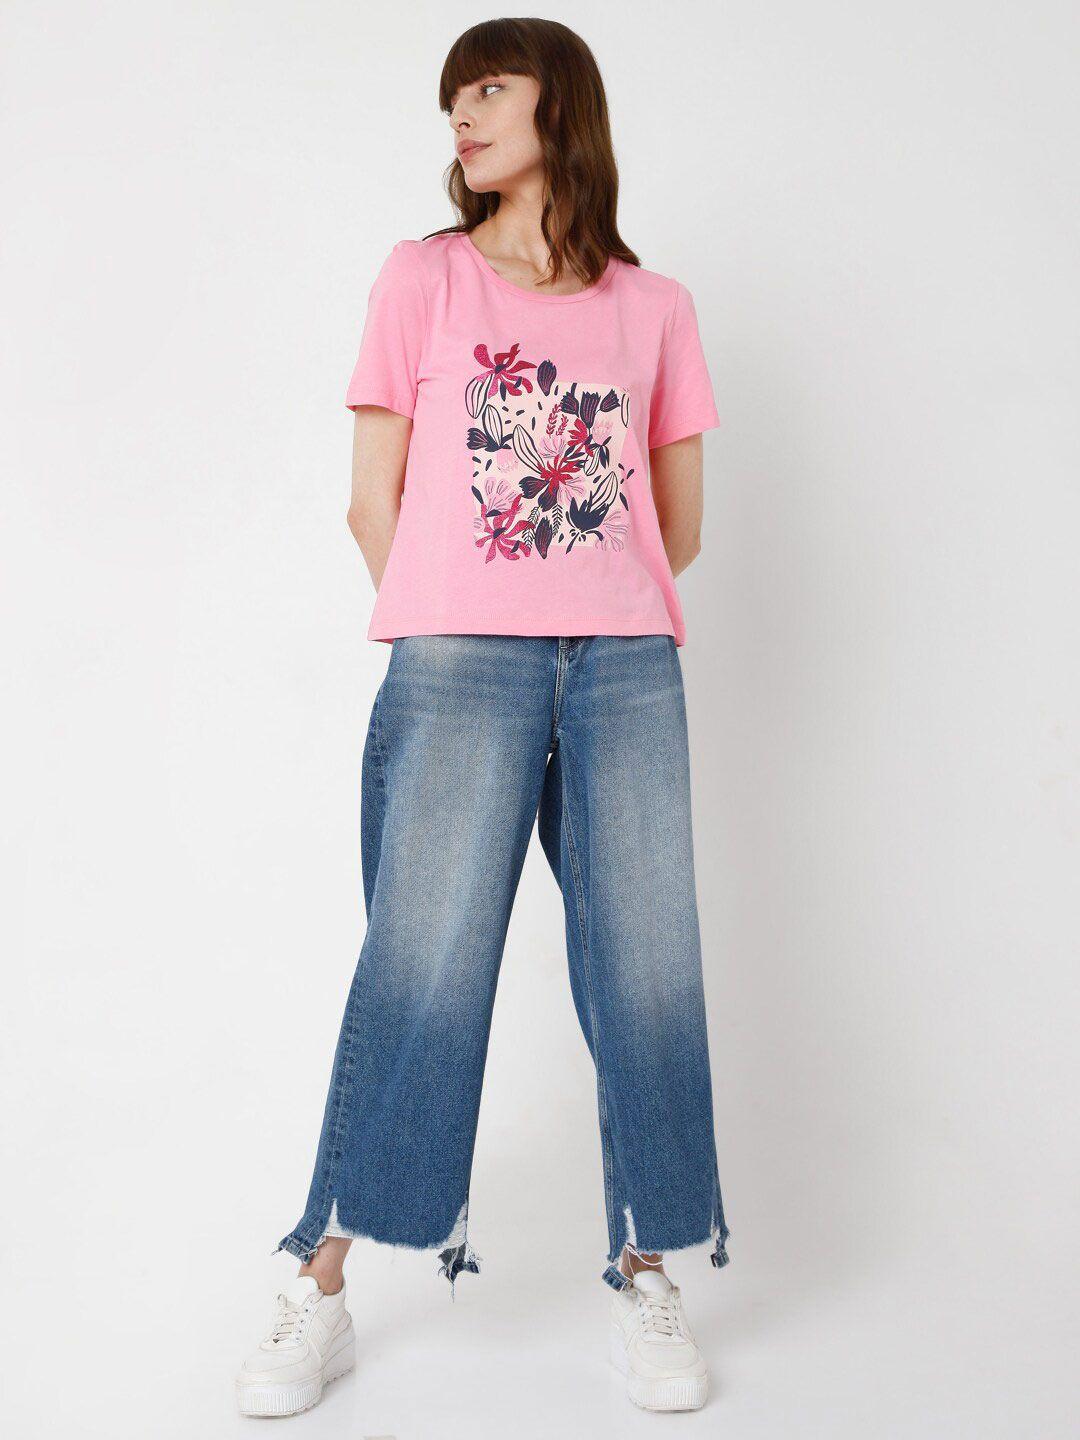 vero moda women pink typography printed pure cotton t-shirt